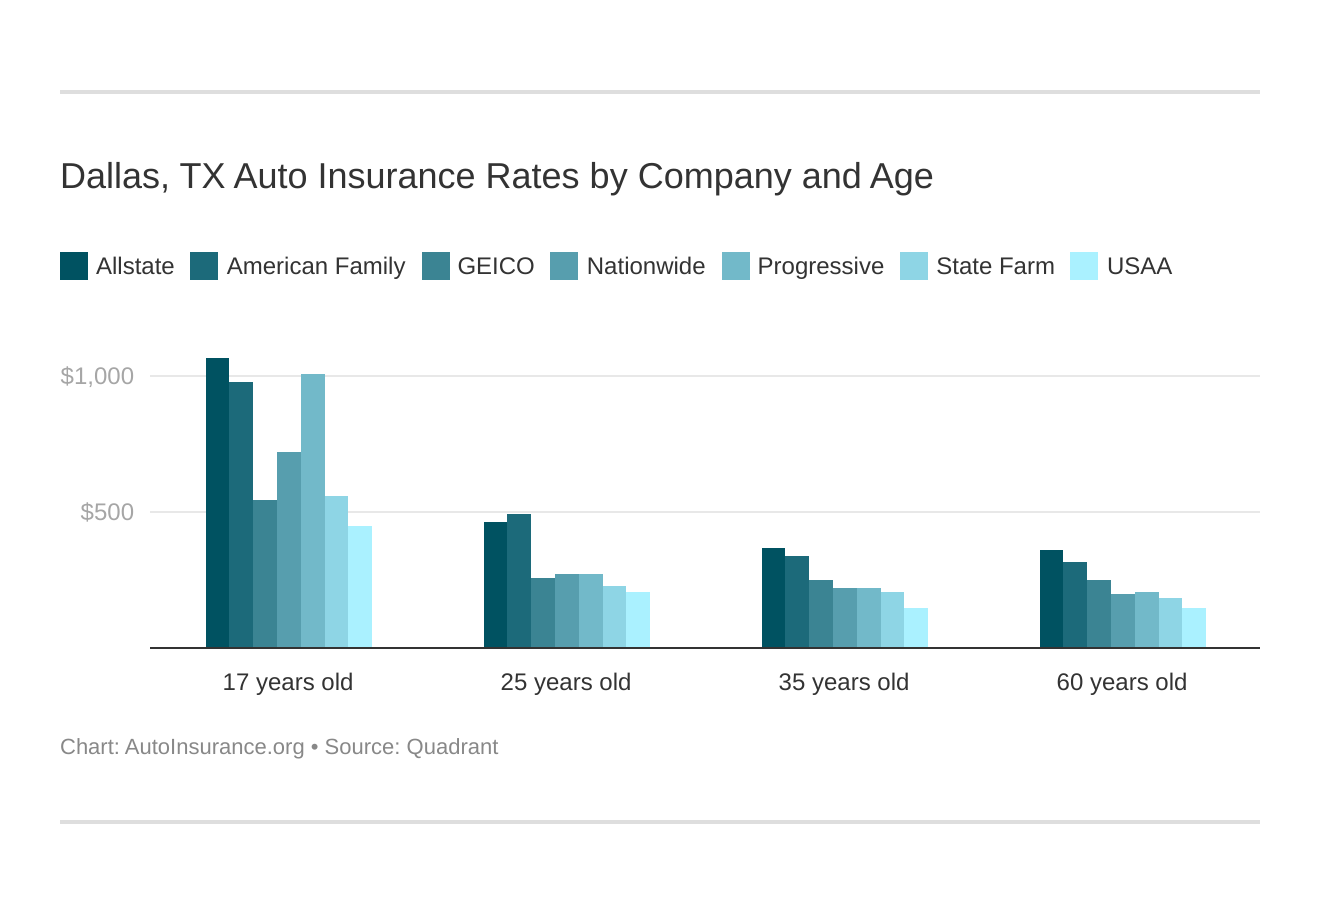 Dallas, TX Auto Insurance Rates by Company and Age